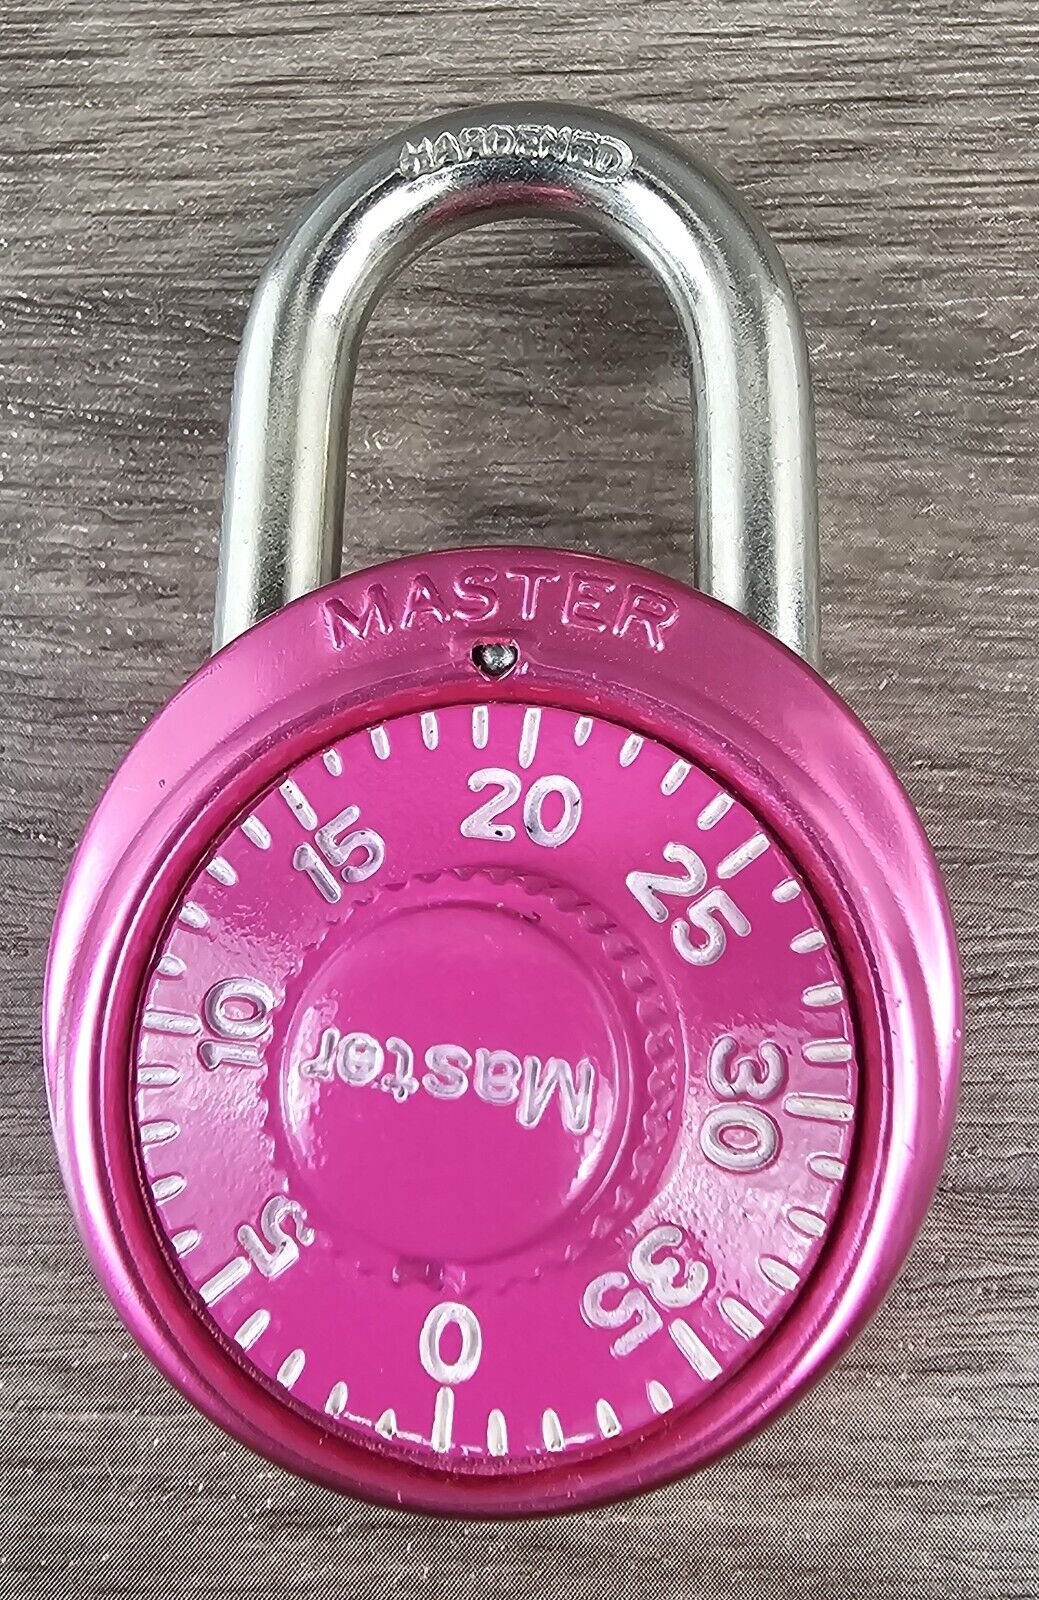 Vintage pink Master lock combination padlock w/ standard dial